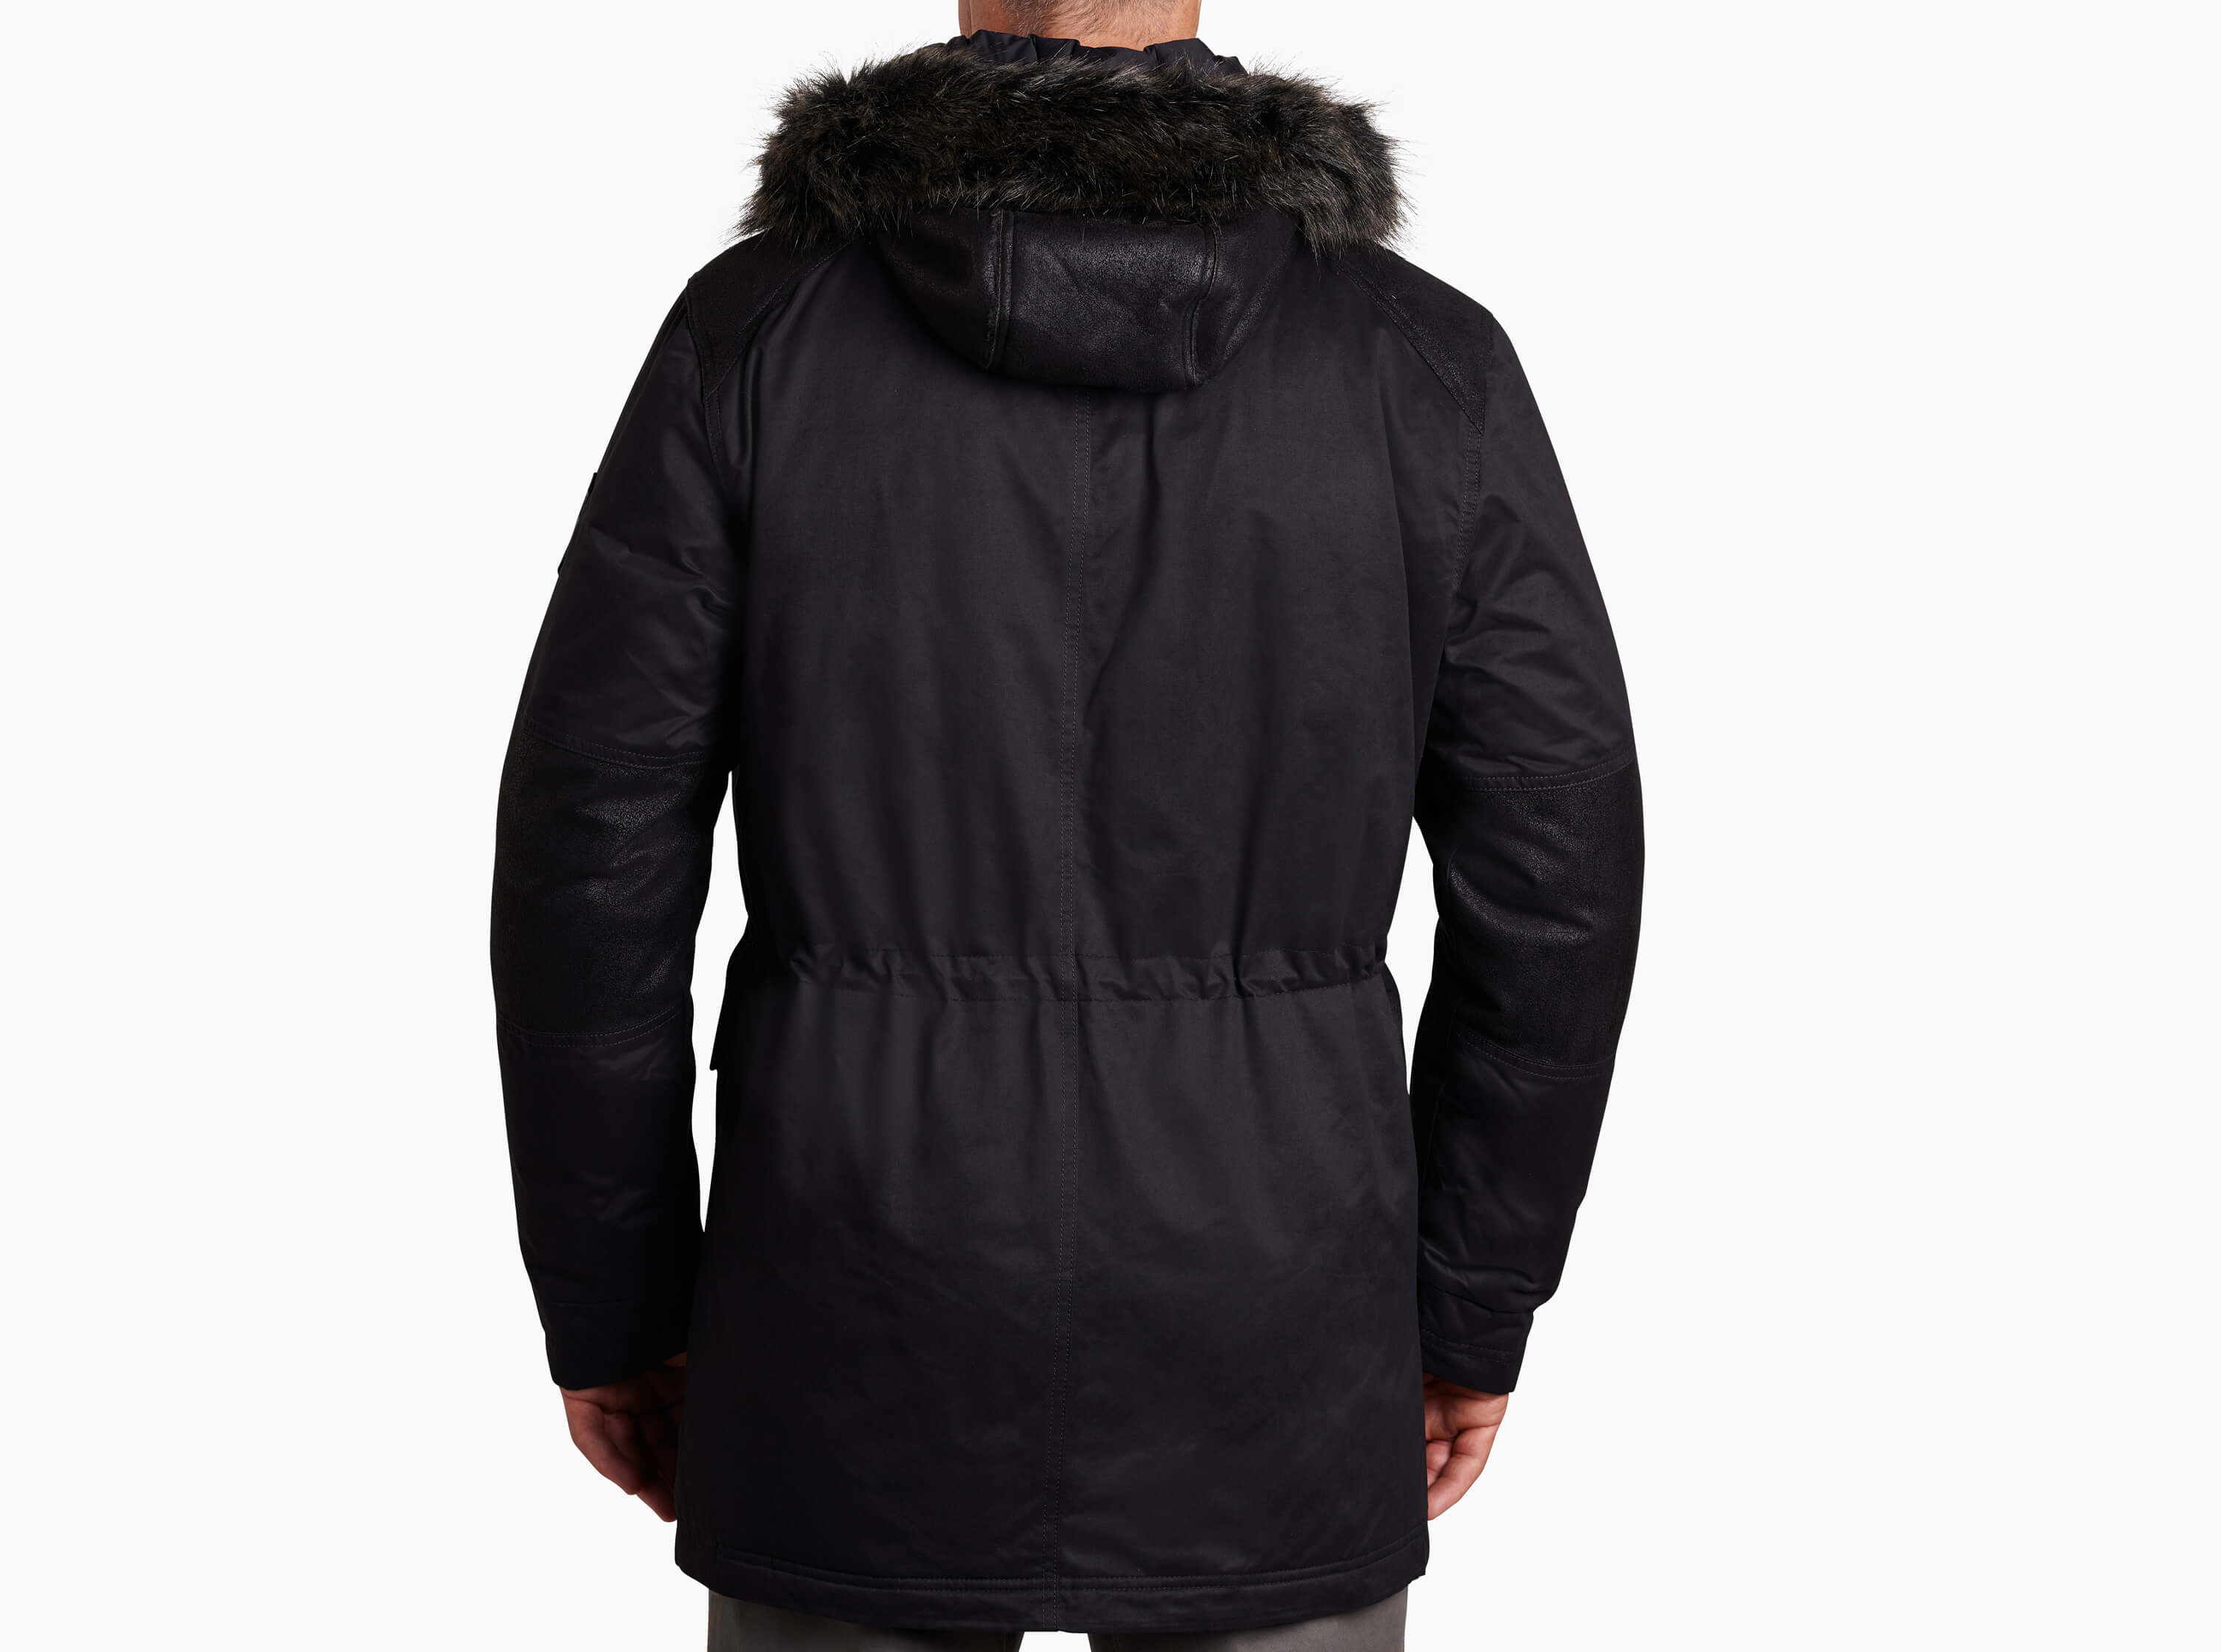 Kuhl, Jackets & Coats, Kuhl Arktik Down Parka Women Size Small